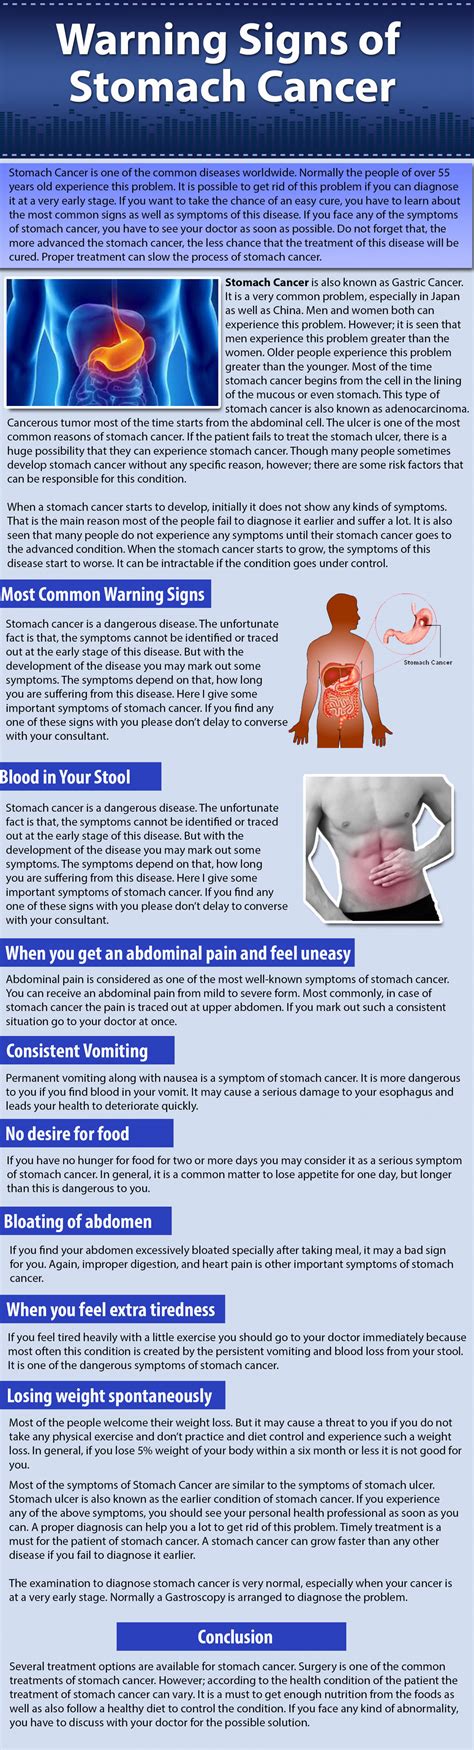 Warning Signs Of Stomach Cancer Visually